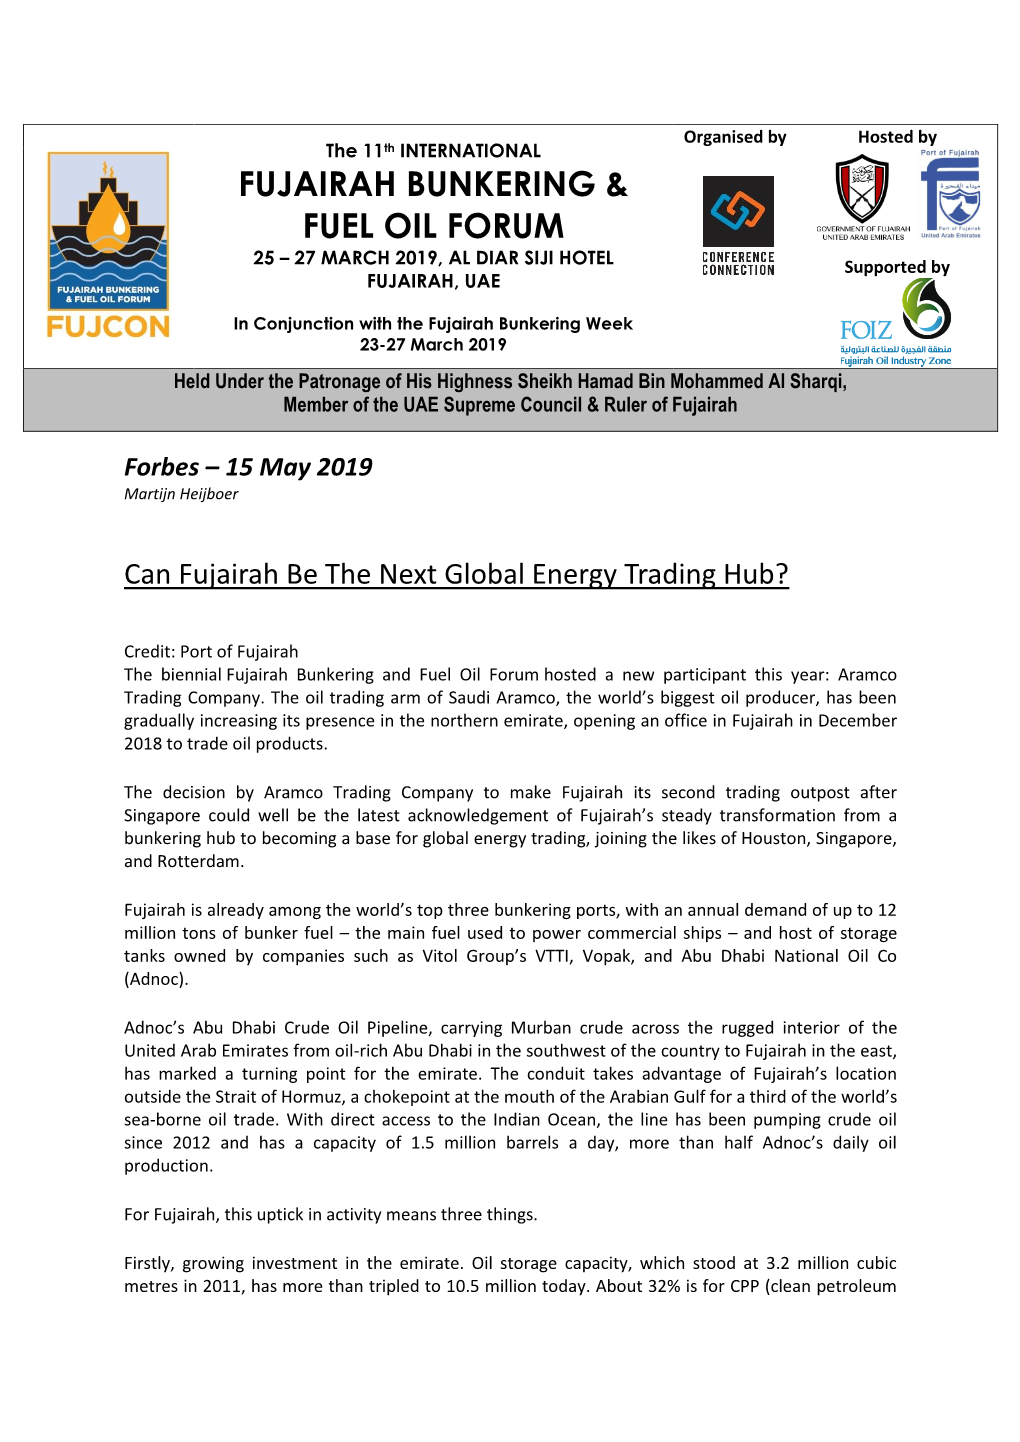 Can Fujairah Be the Next Global Energy Trading Hub – May2019